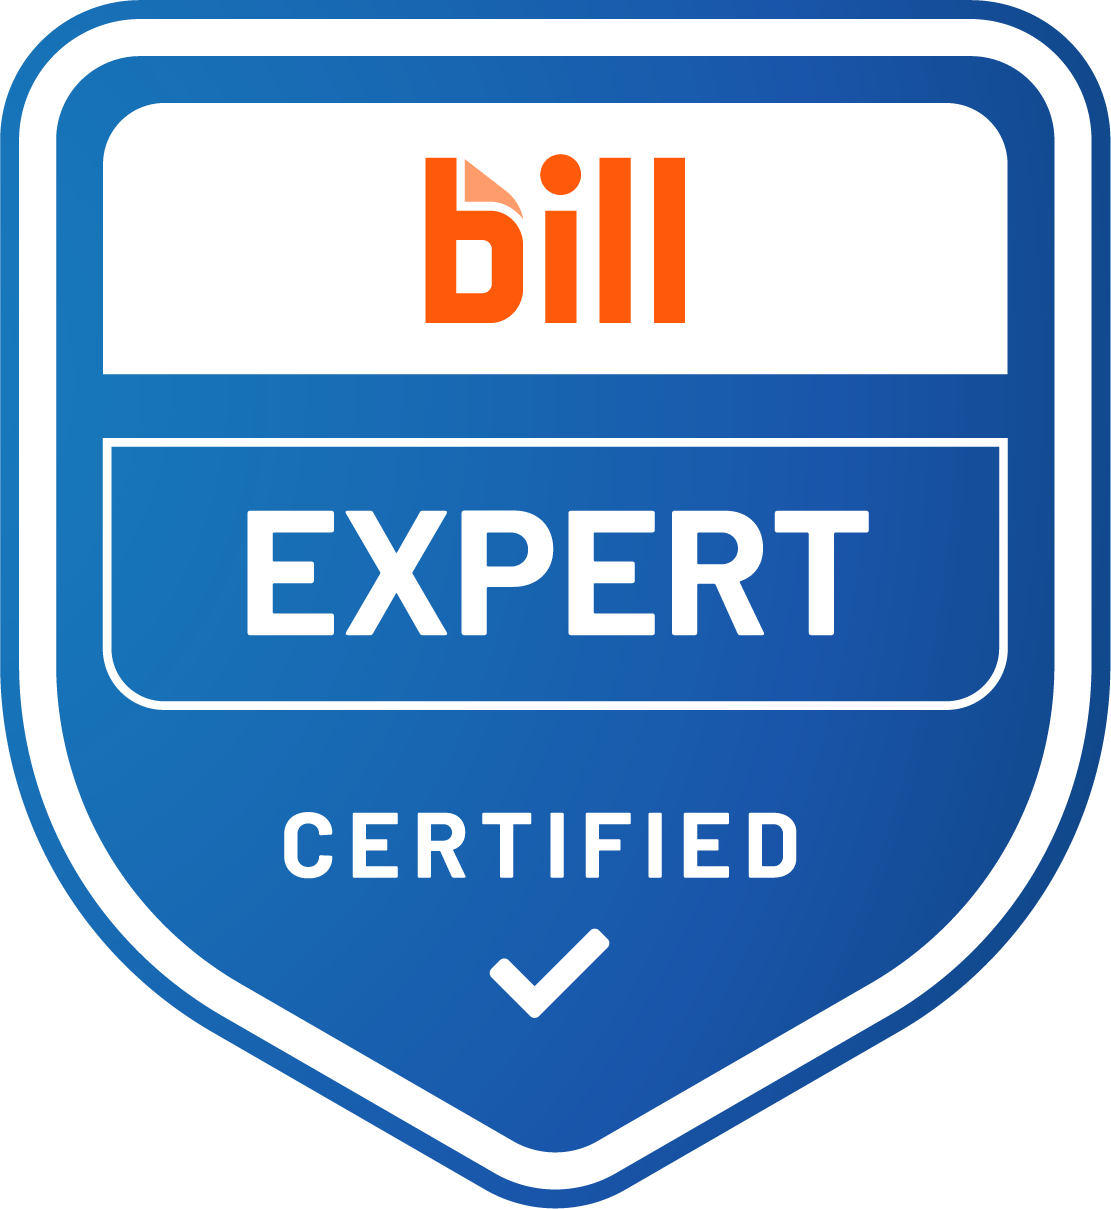 Bill.com Accountant Partner Program -Certified Expert